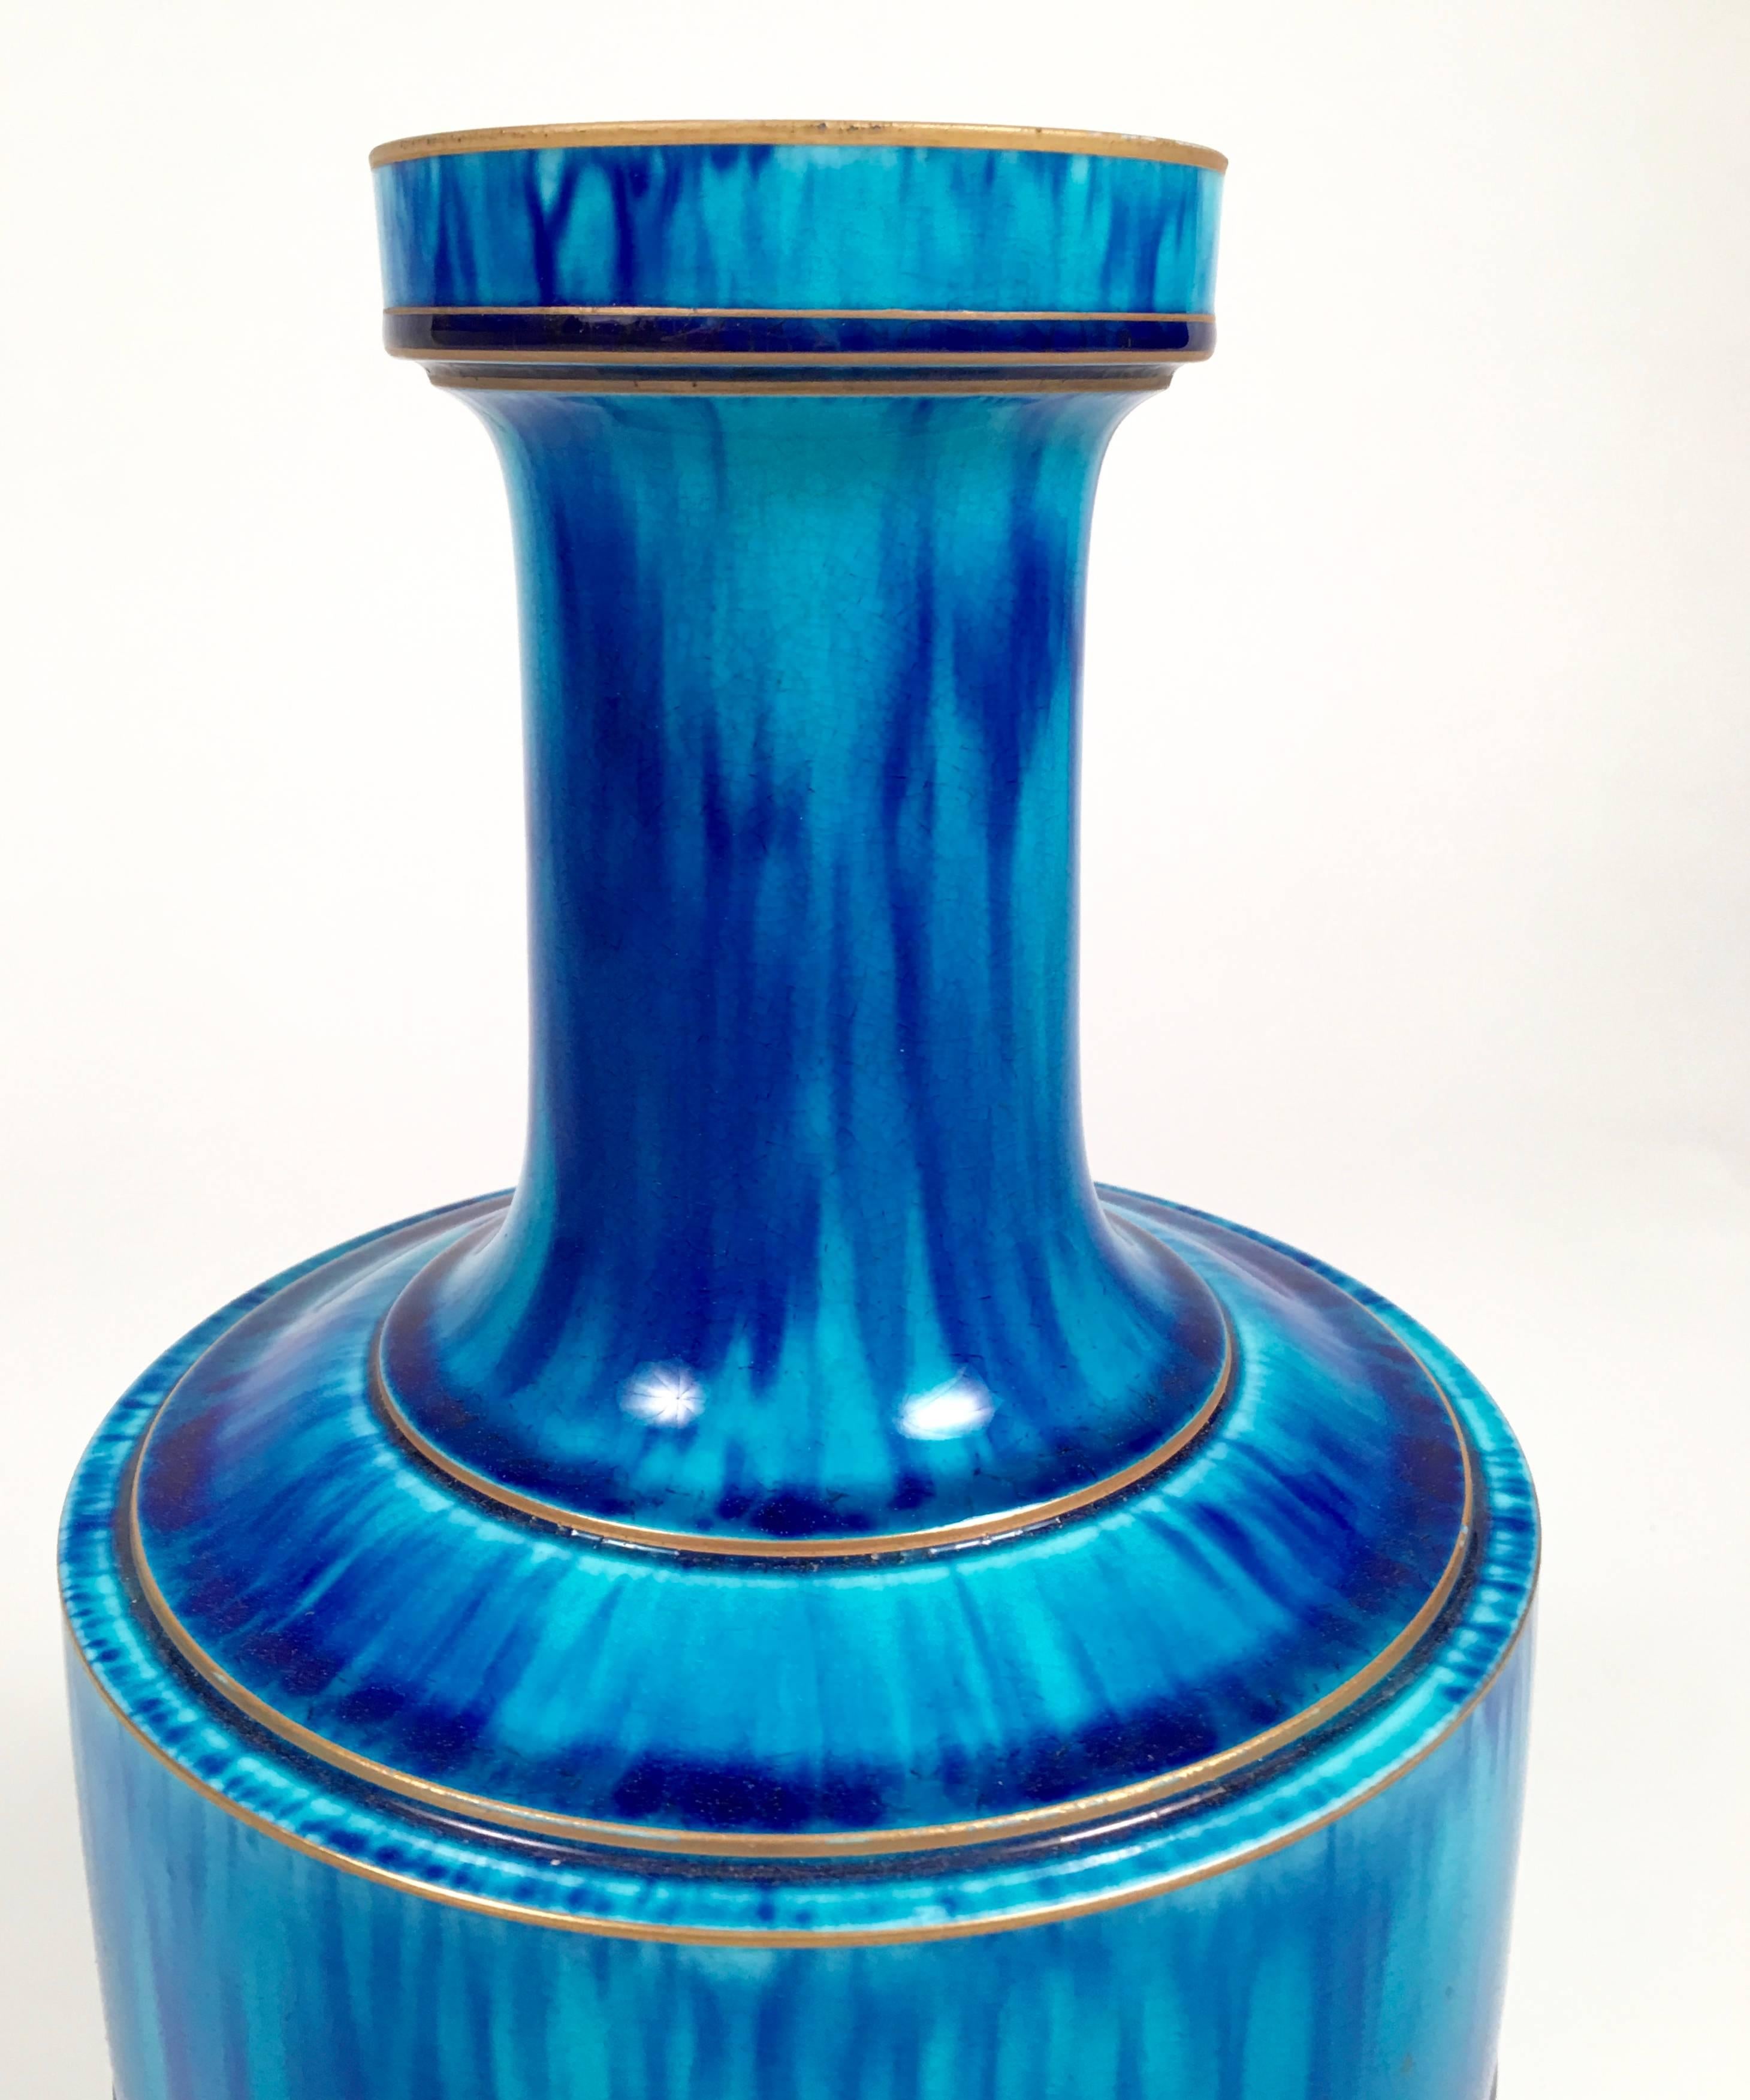 Aesthetic Movement 19th Century French Blue Flambé Pottery Vase